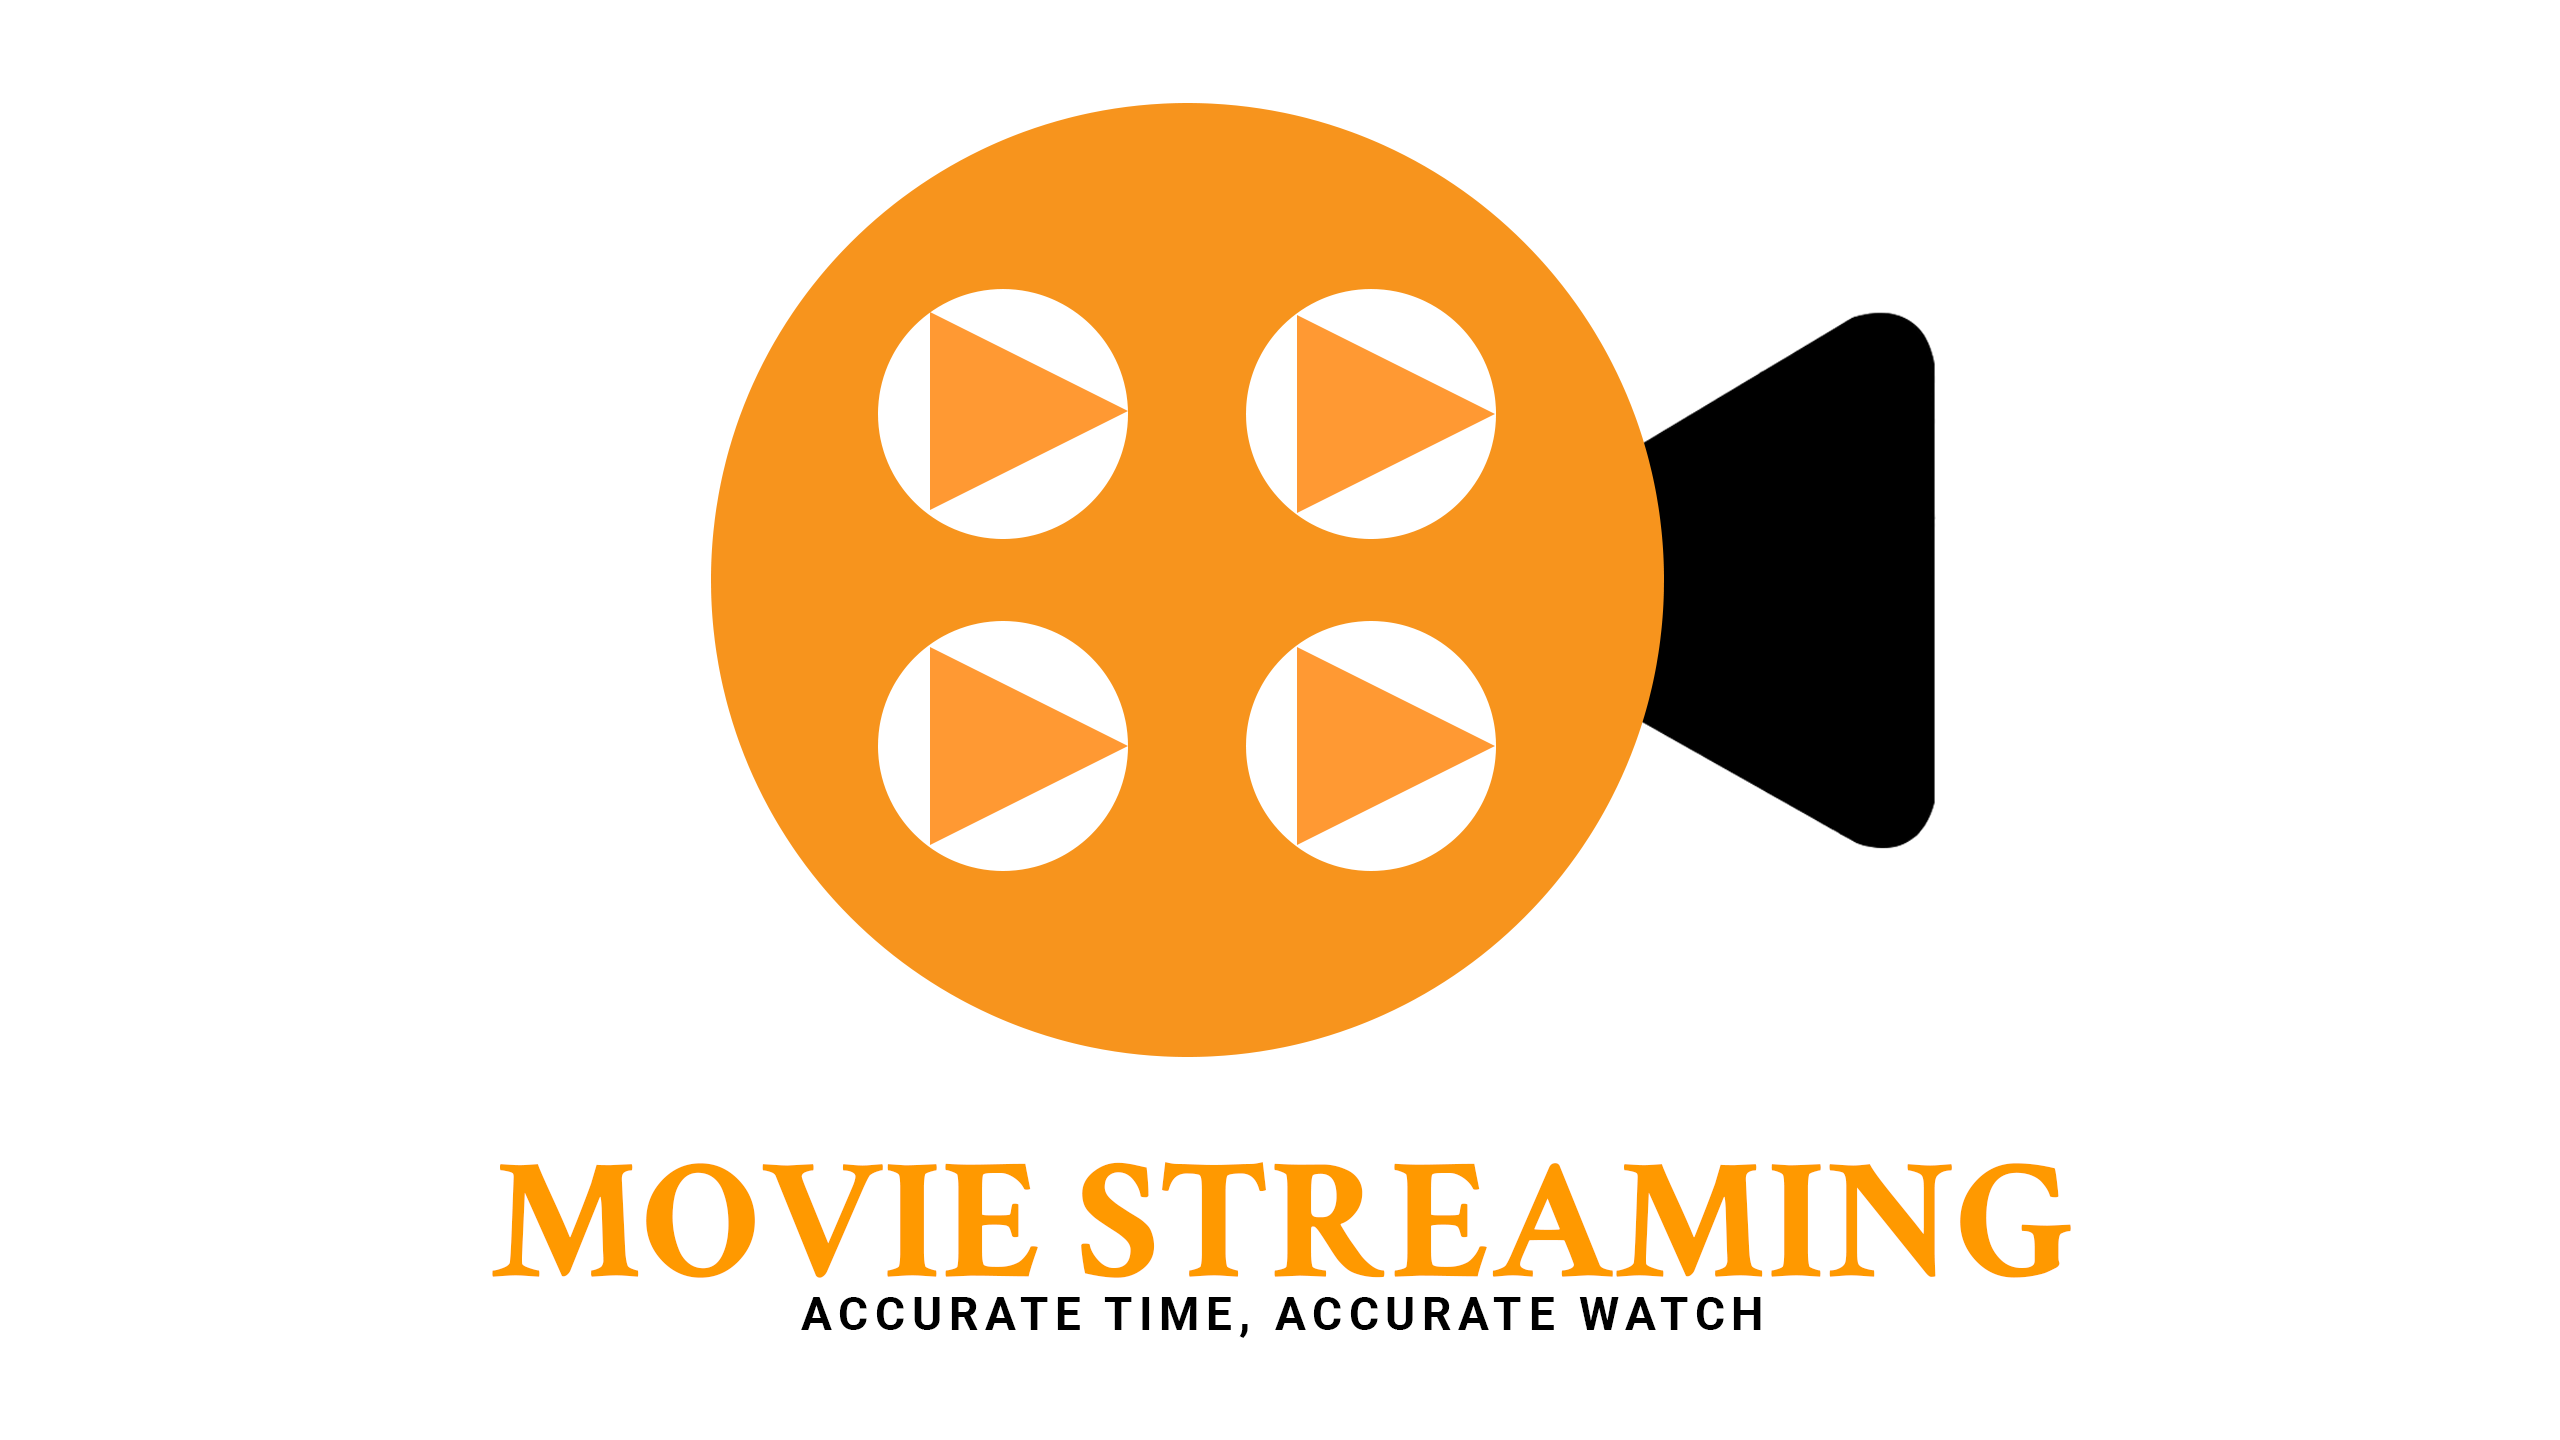 Movie streaming logo